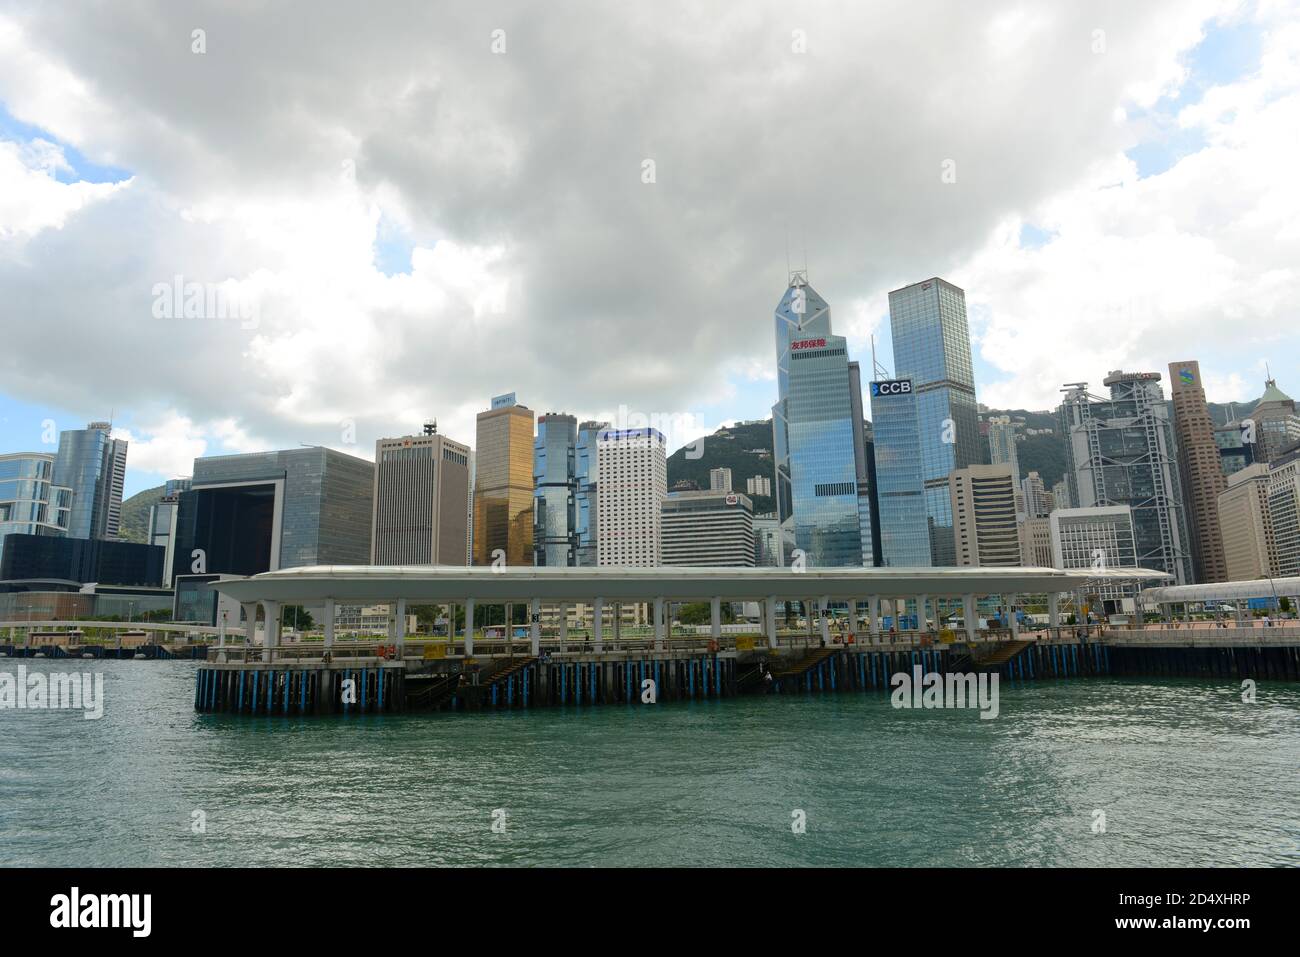 Grattacieli del distretto finanziario centrale di Hong Kong, tra cui Bank of China Tower, AIA Central, Cheung Kong Center, ecc. a Hong Kong, Cina. Foto Stock